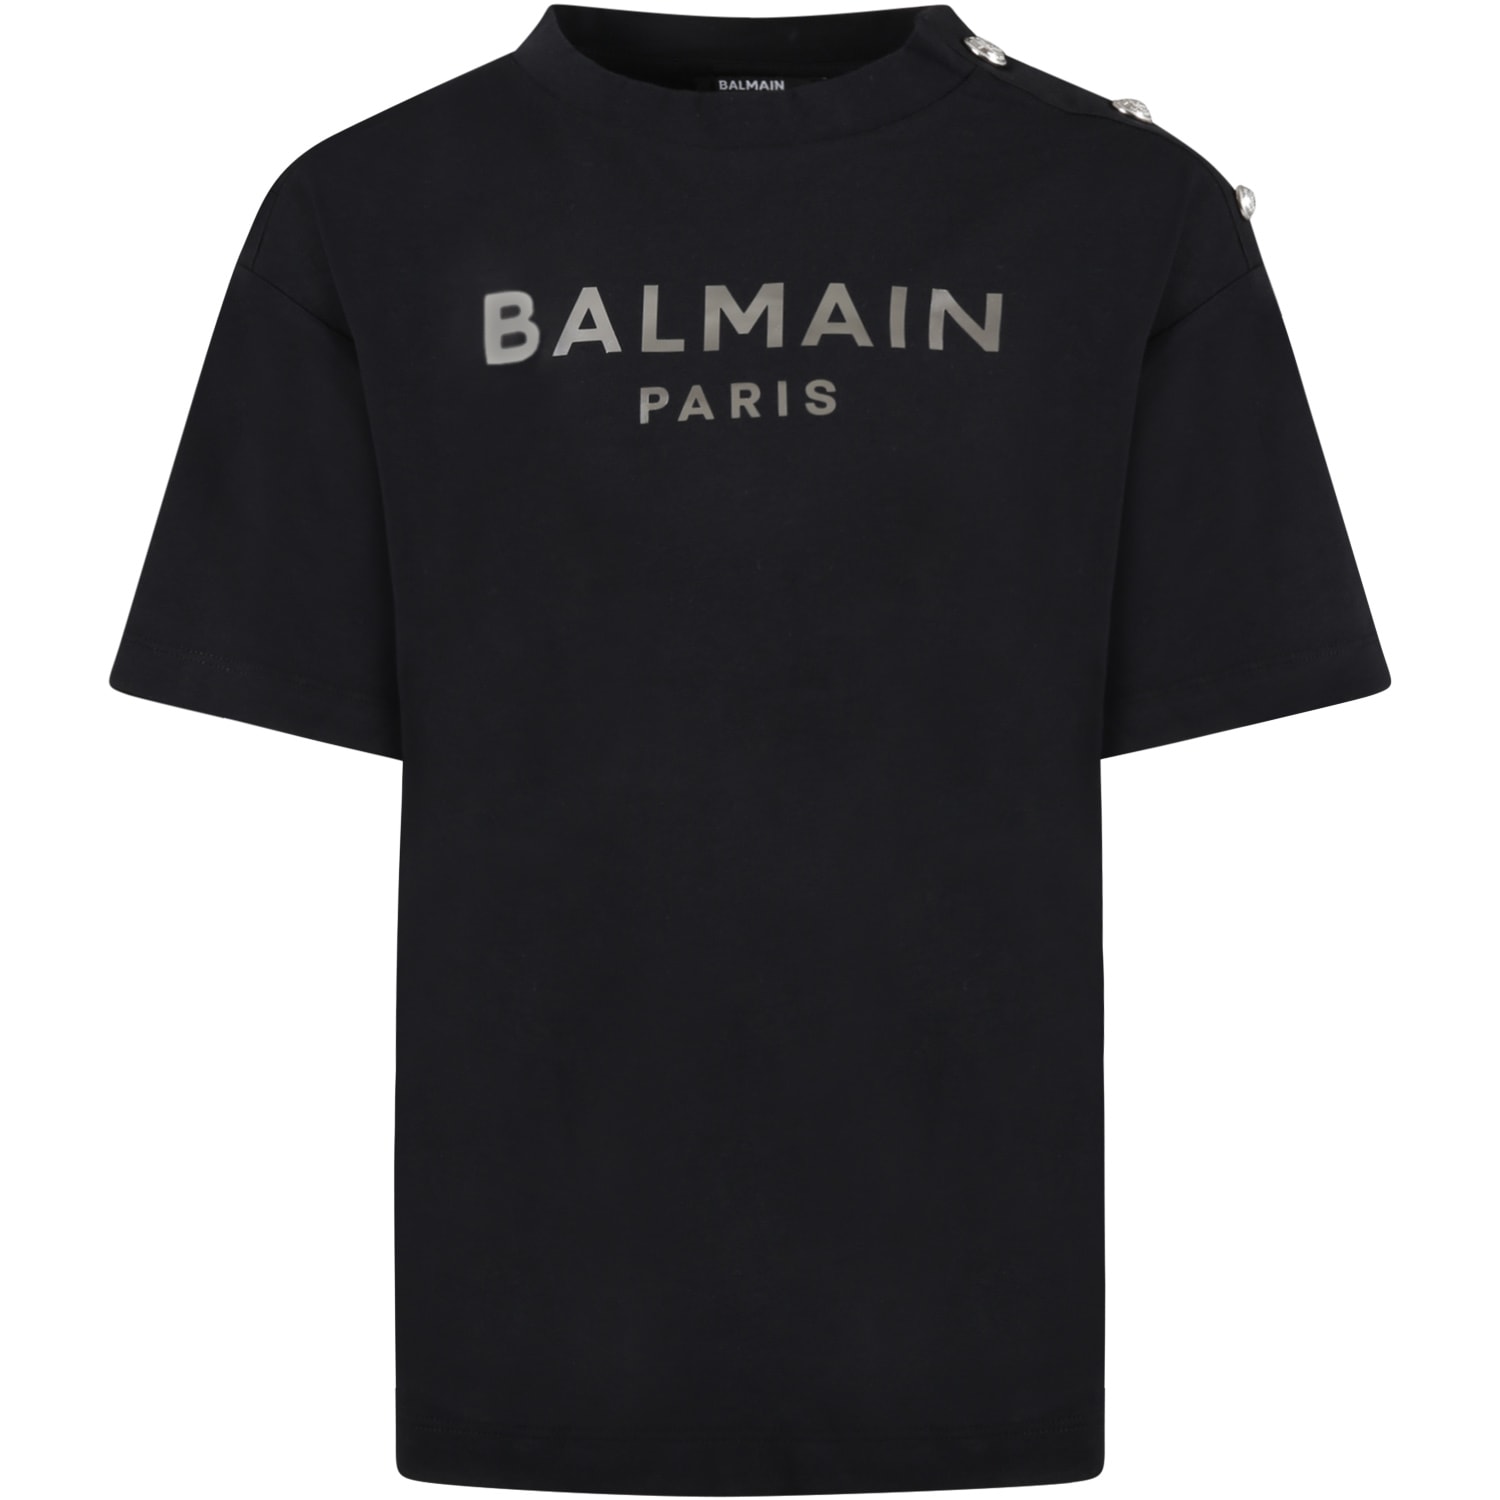 Balmain Black T-shirt For Kids With Silver Logo